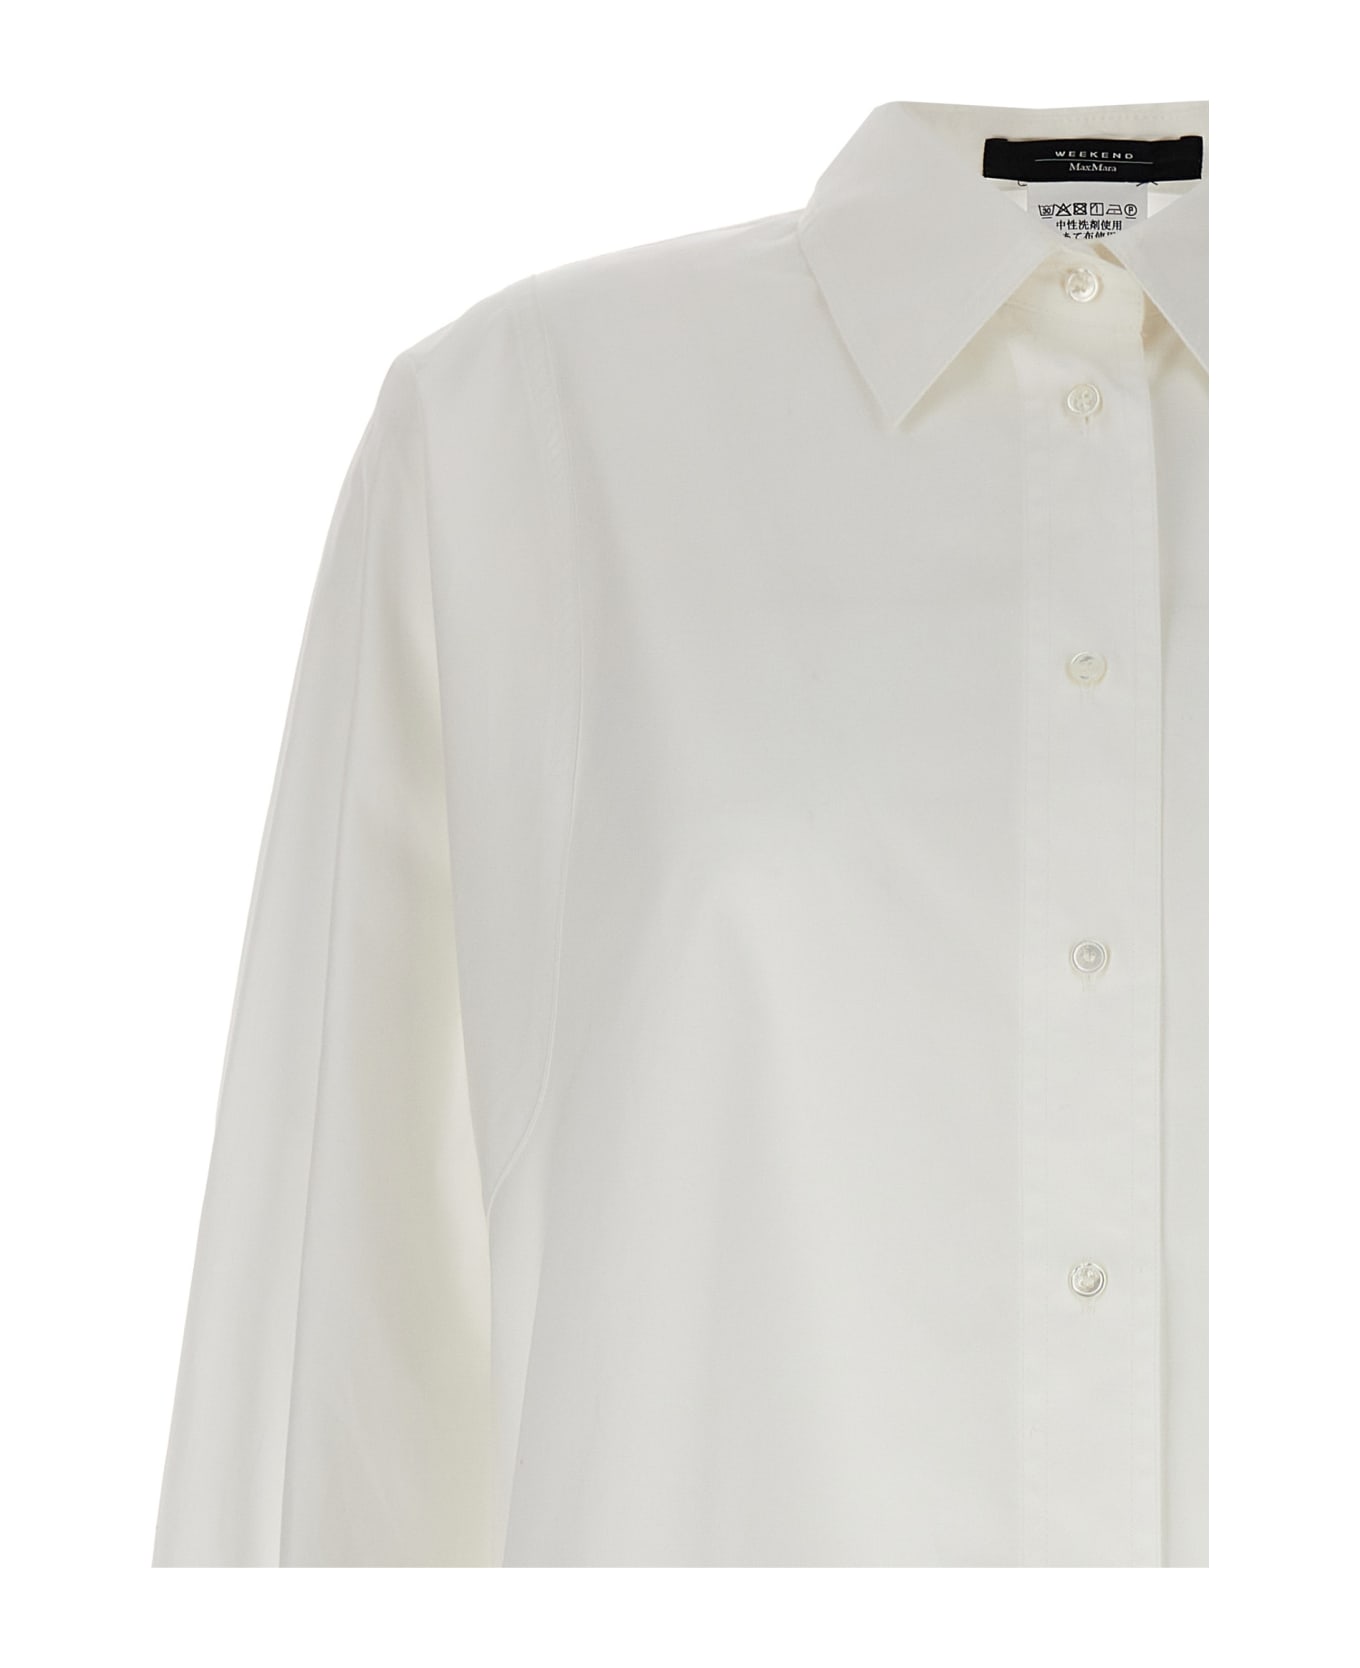 Weekend Max Mara 'fufy' Shirt - White シャツ